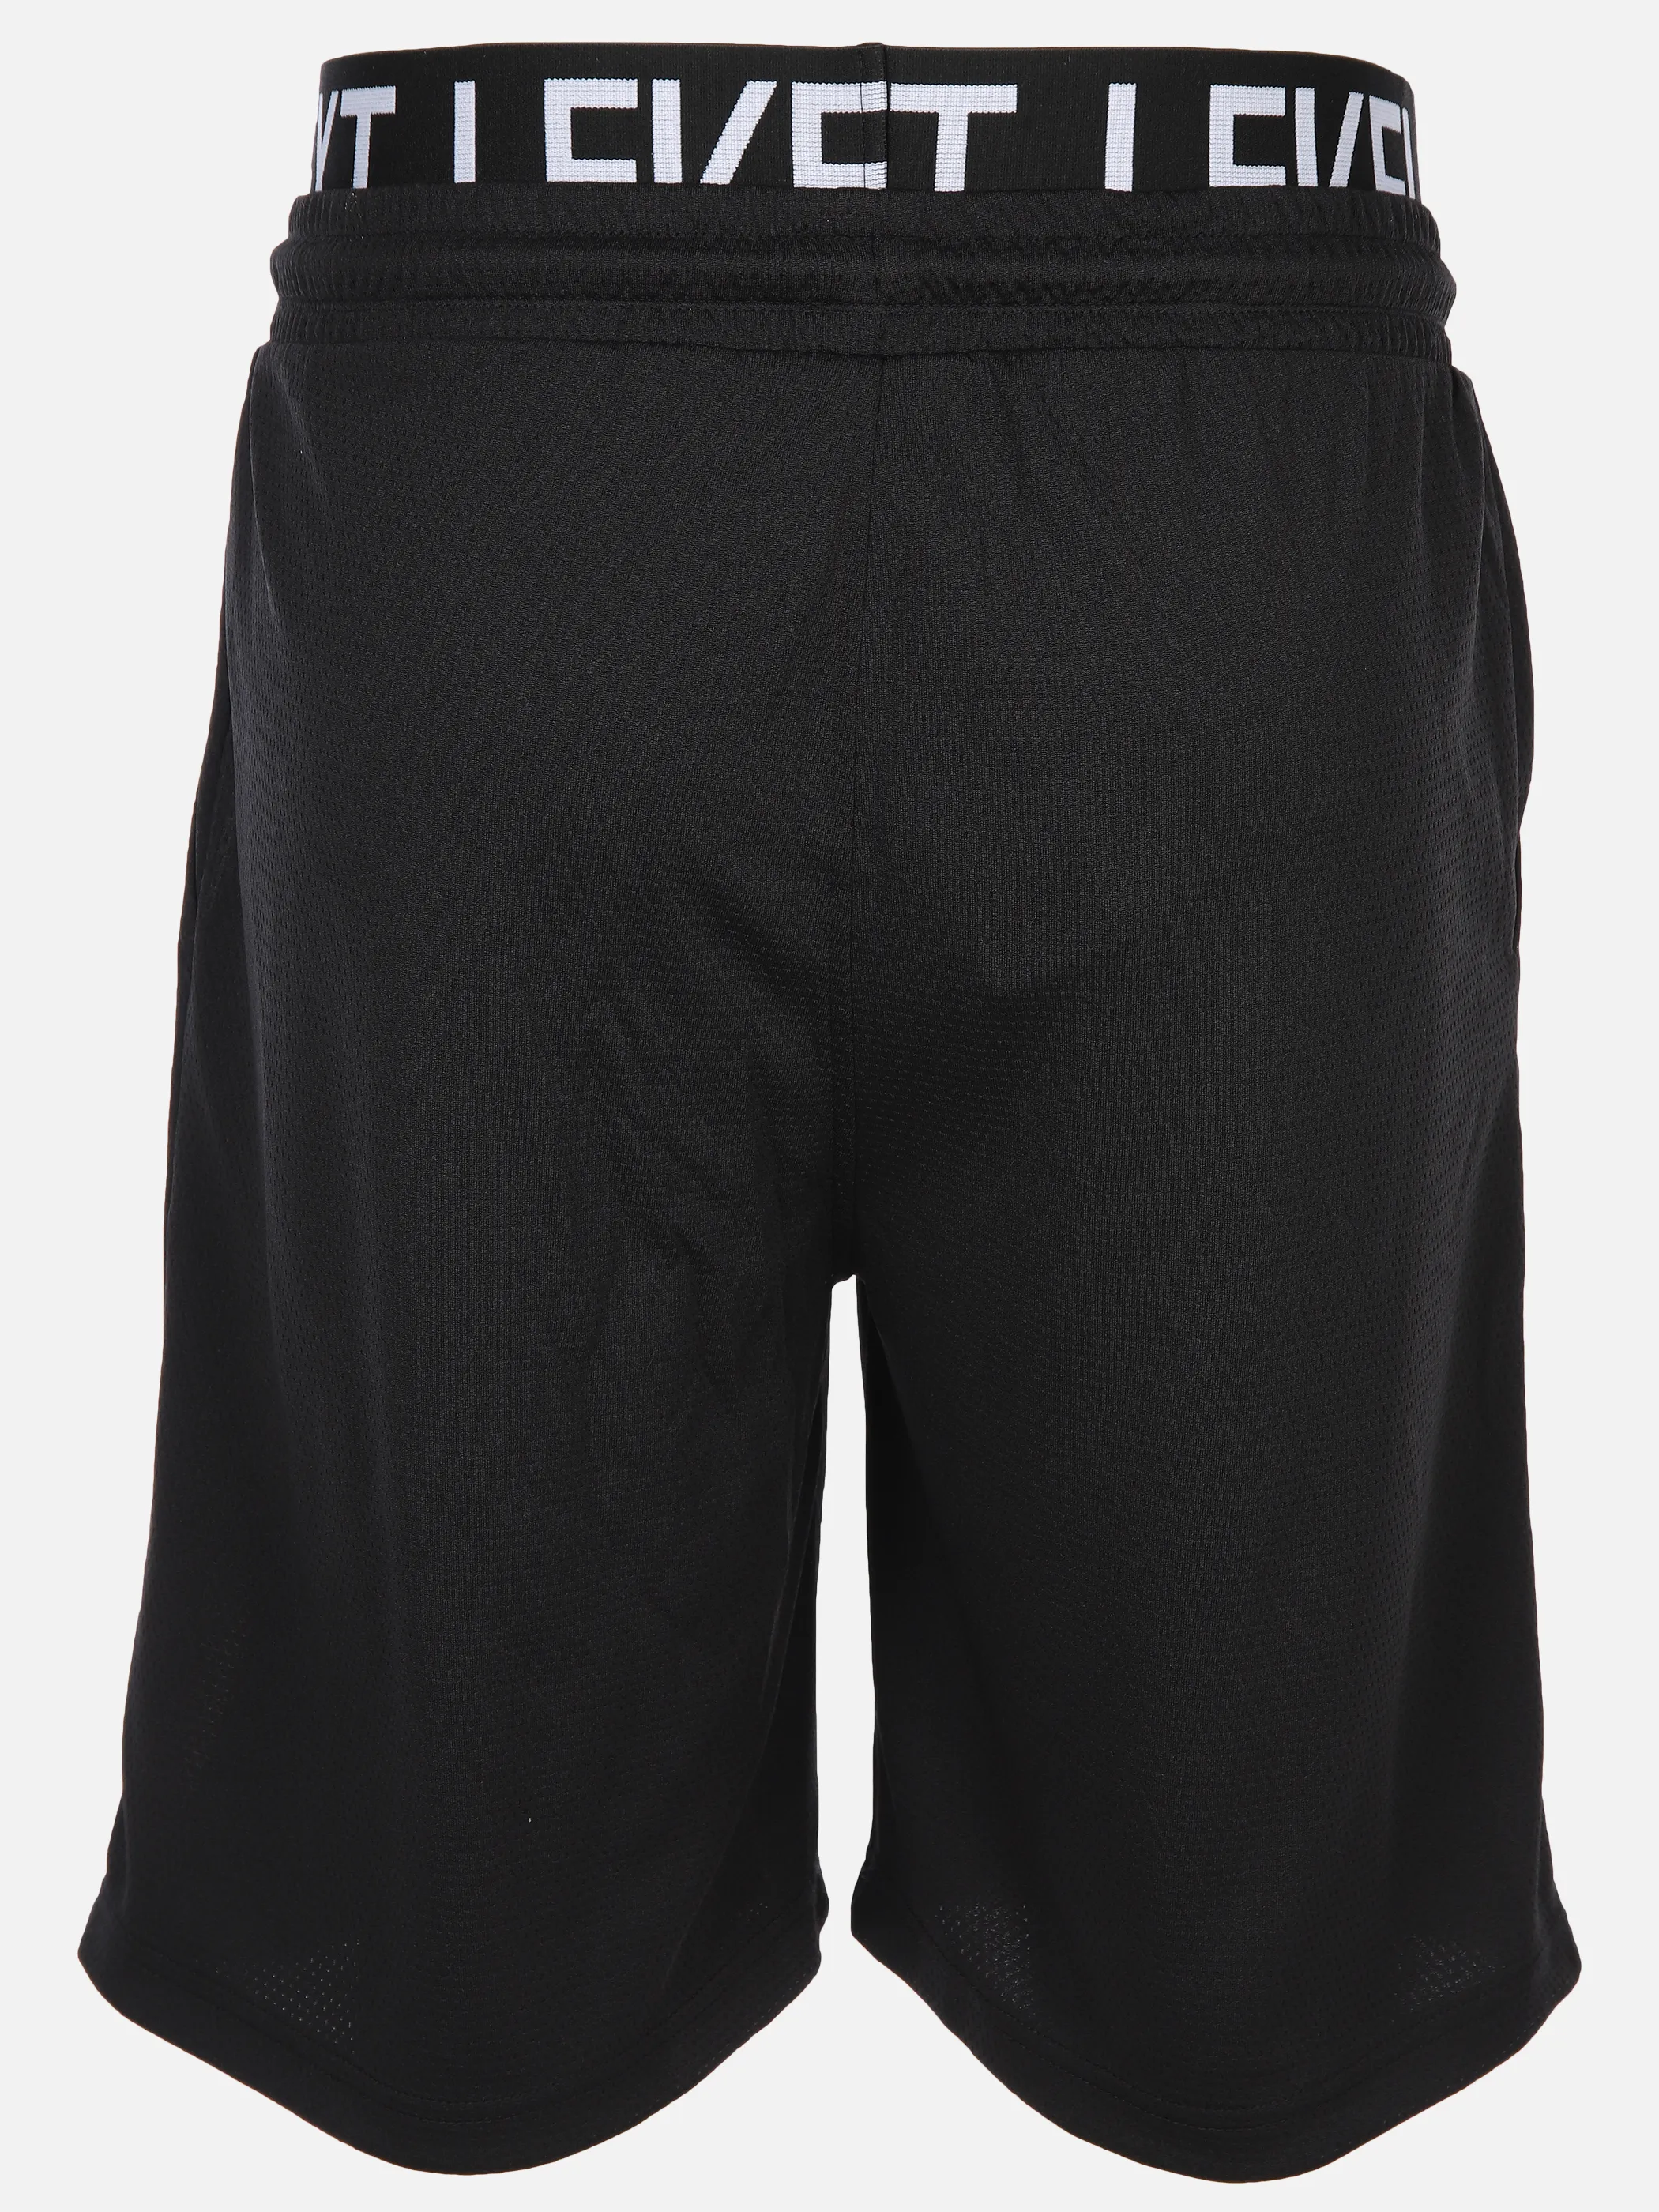 Grinario Sports He- Shorts Schwarz 890156 BLACK 2